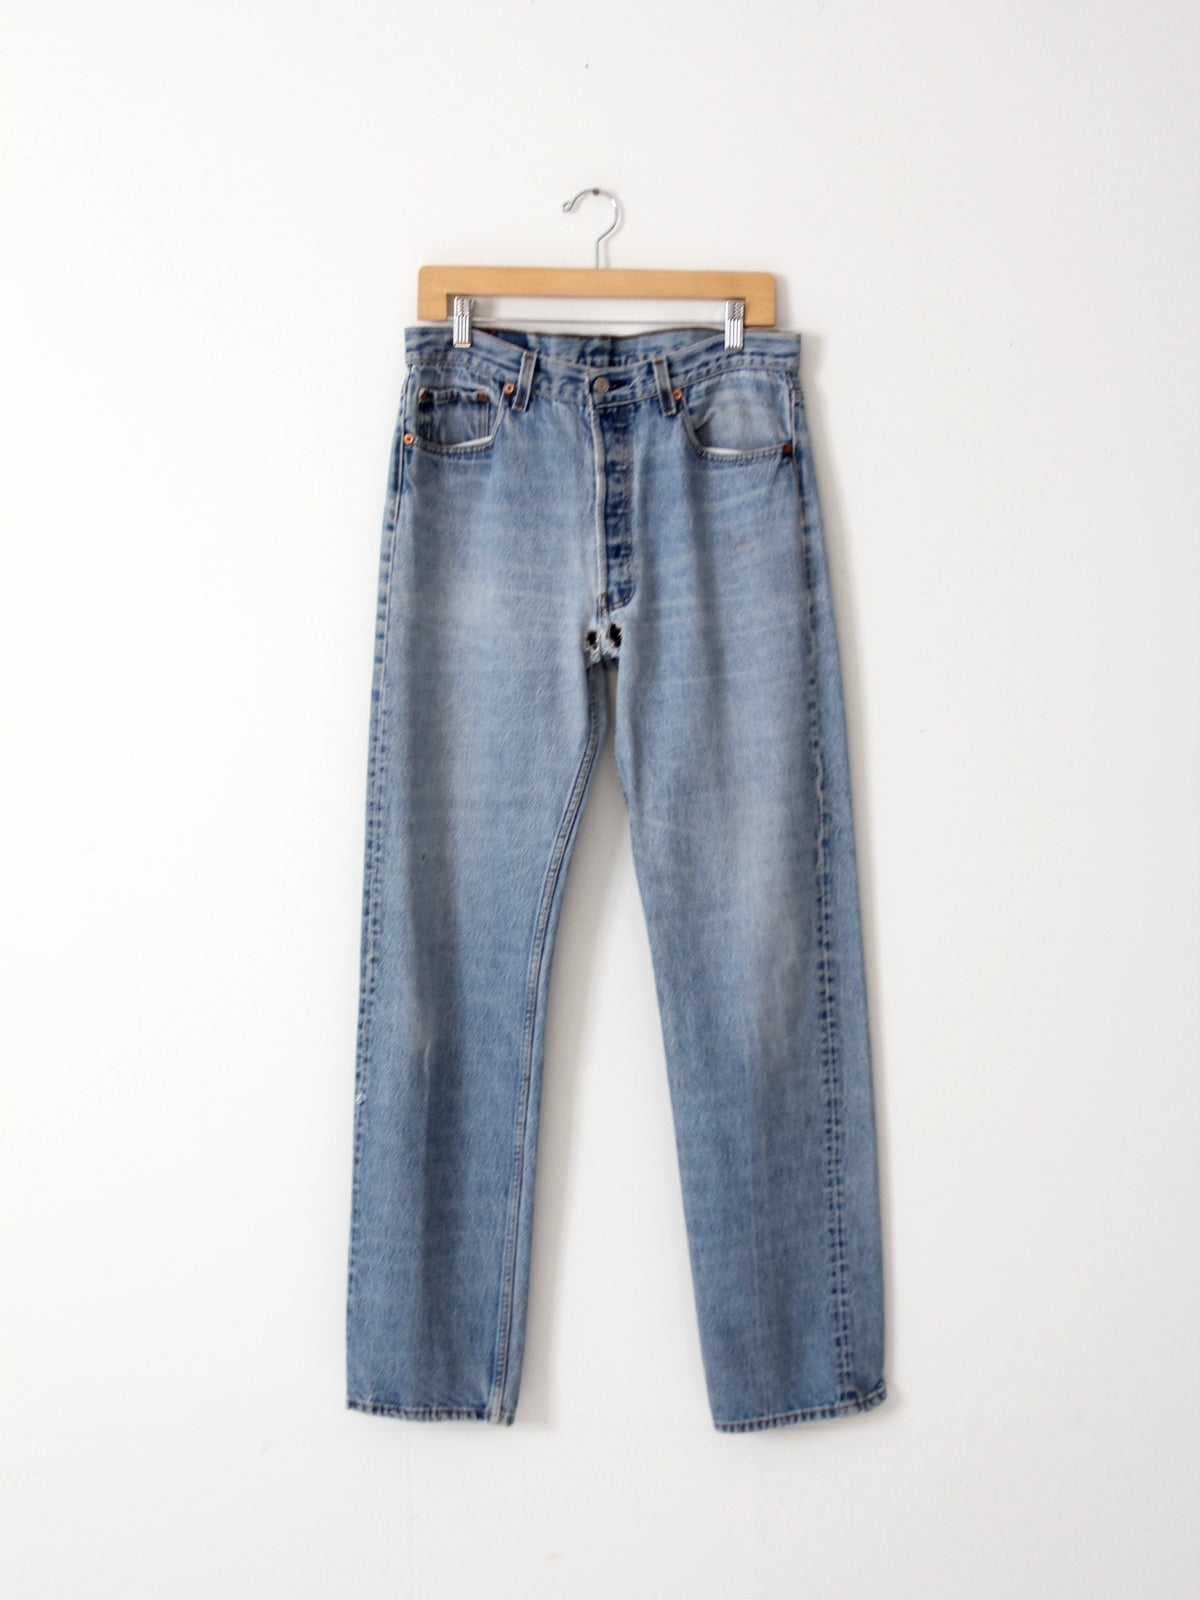 30 Waist Vintage 90s Levi's 501 Jeans Unisex Distressed Denim Straight Leg  High Waist Boyfriend Jeans -  New Zealand